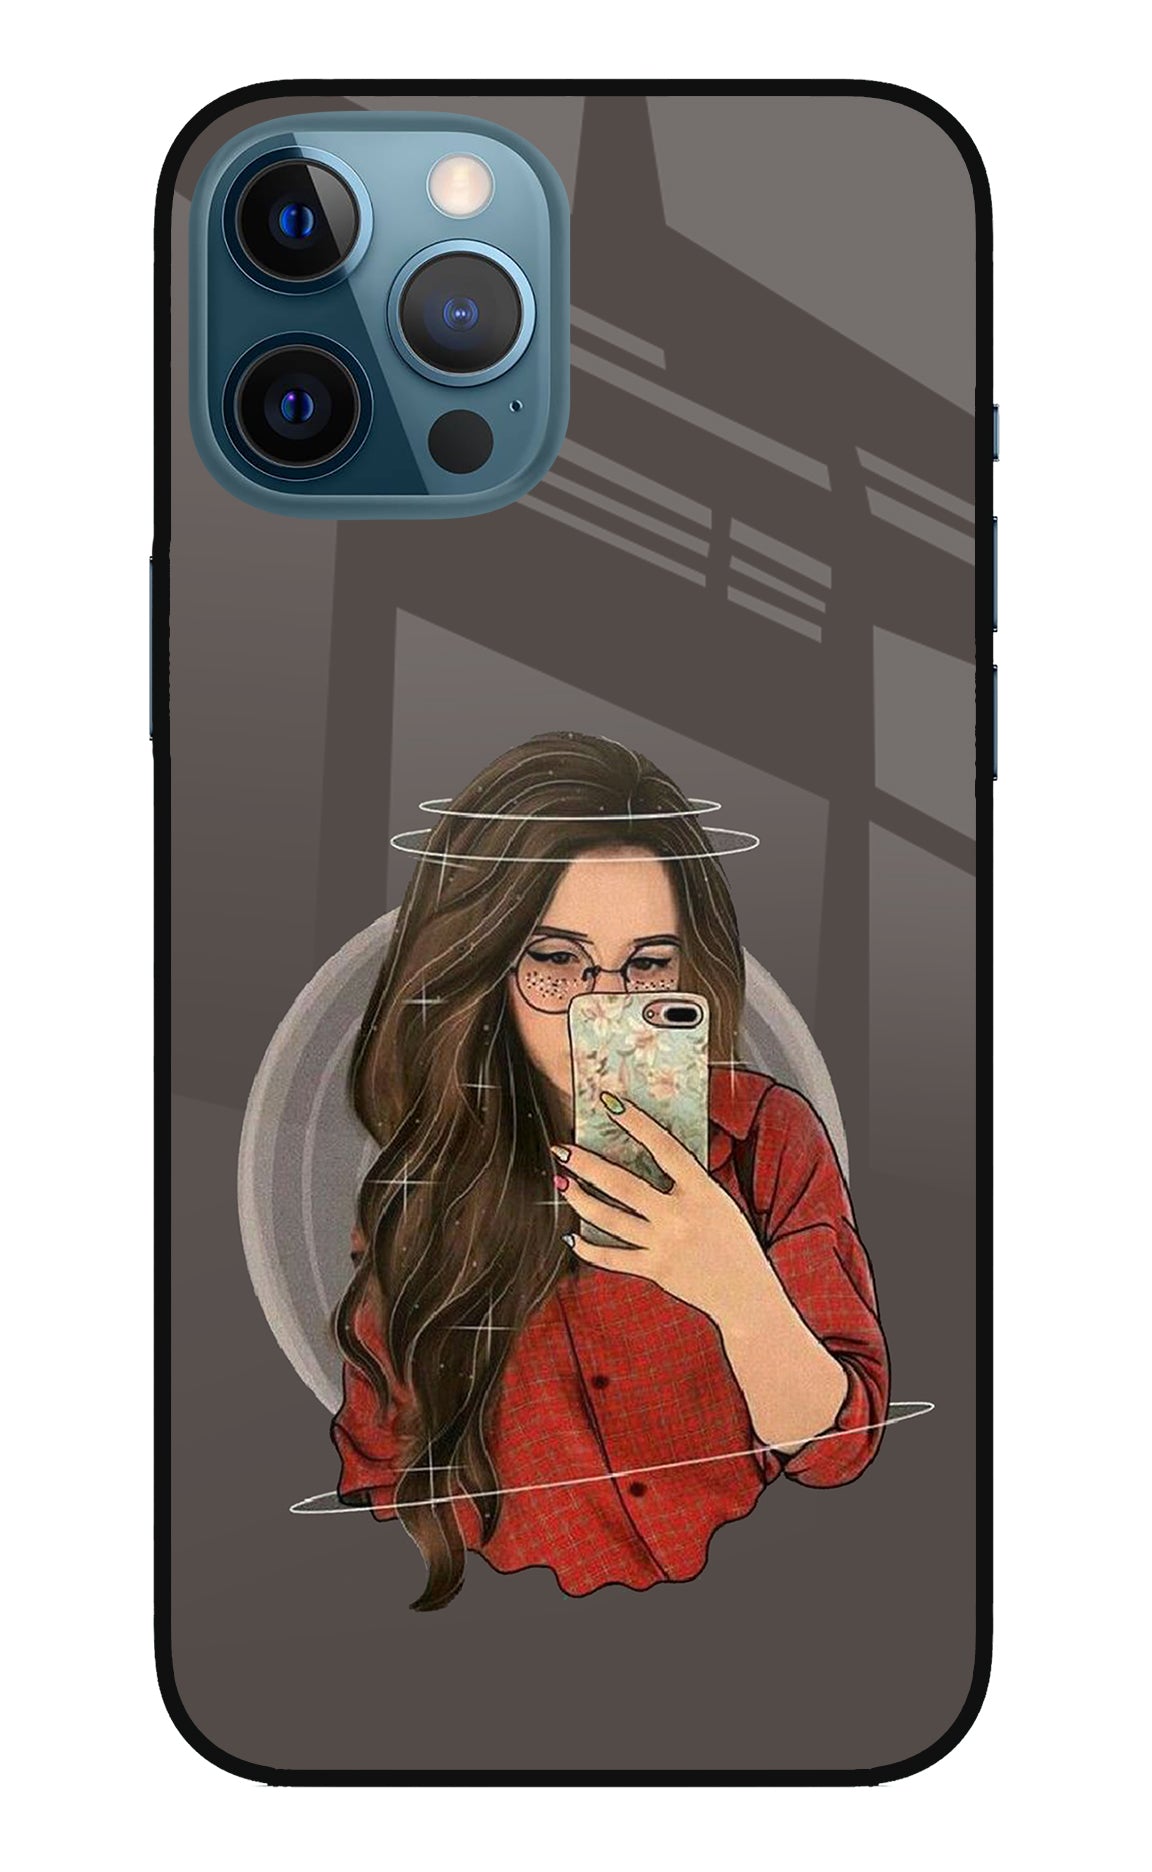 Selfie Queen iPhone 12 Pro Max Back Cover